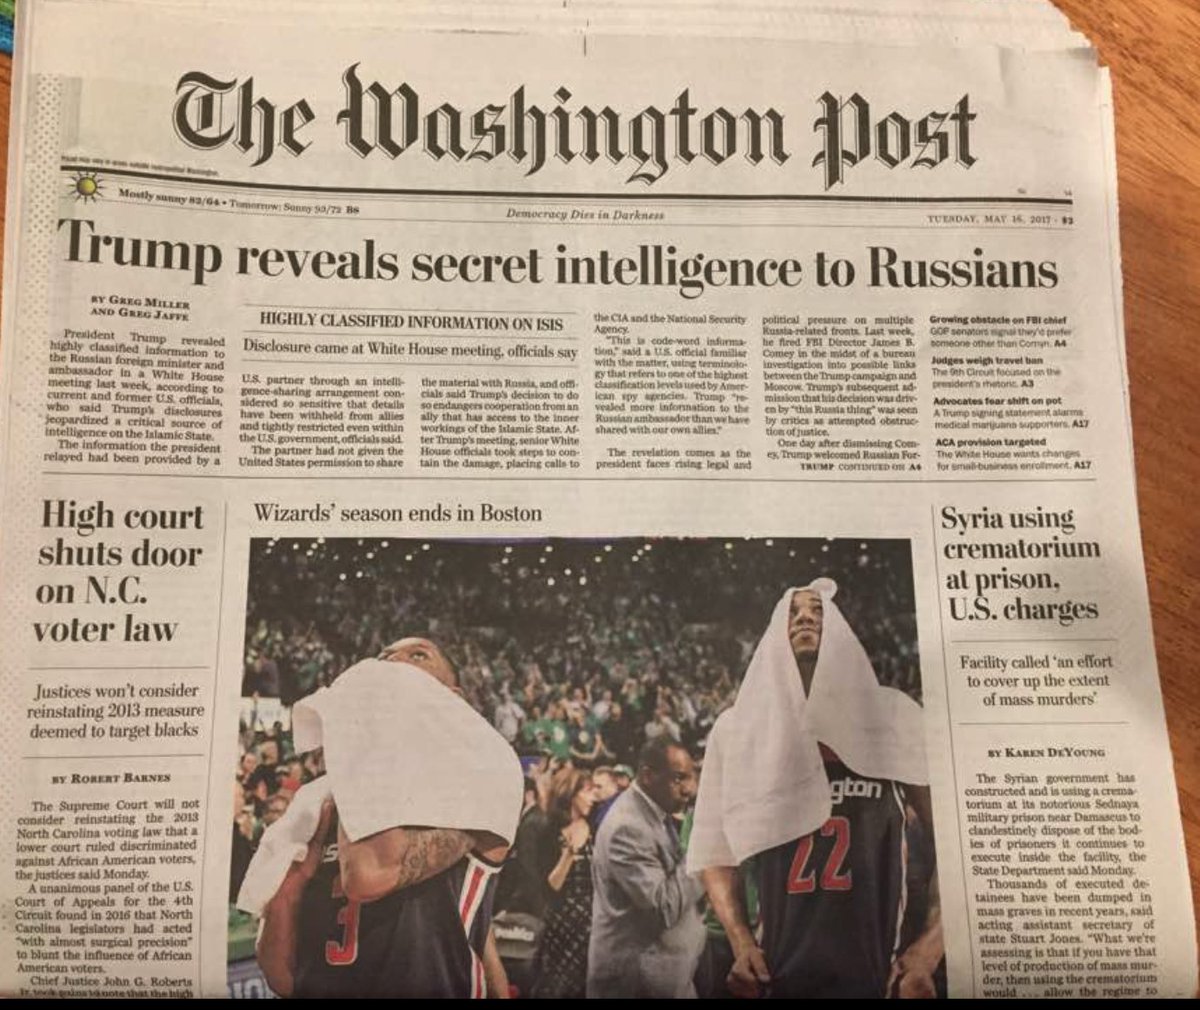 Seven yrs ago -- Trump reveals secret intelligence to Russians